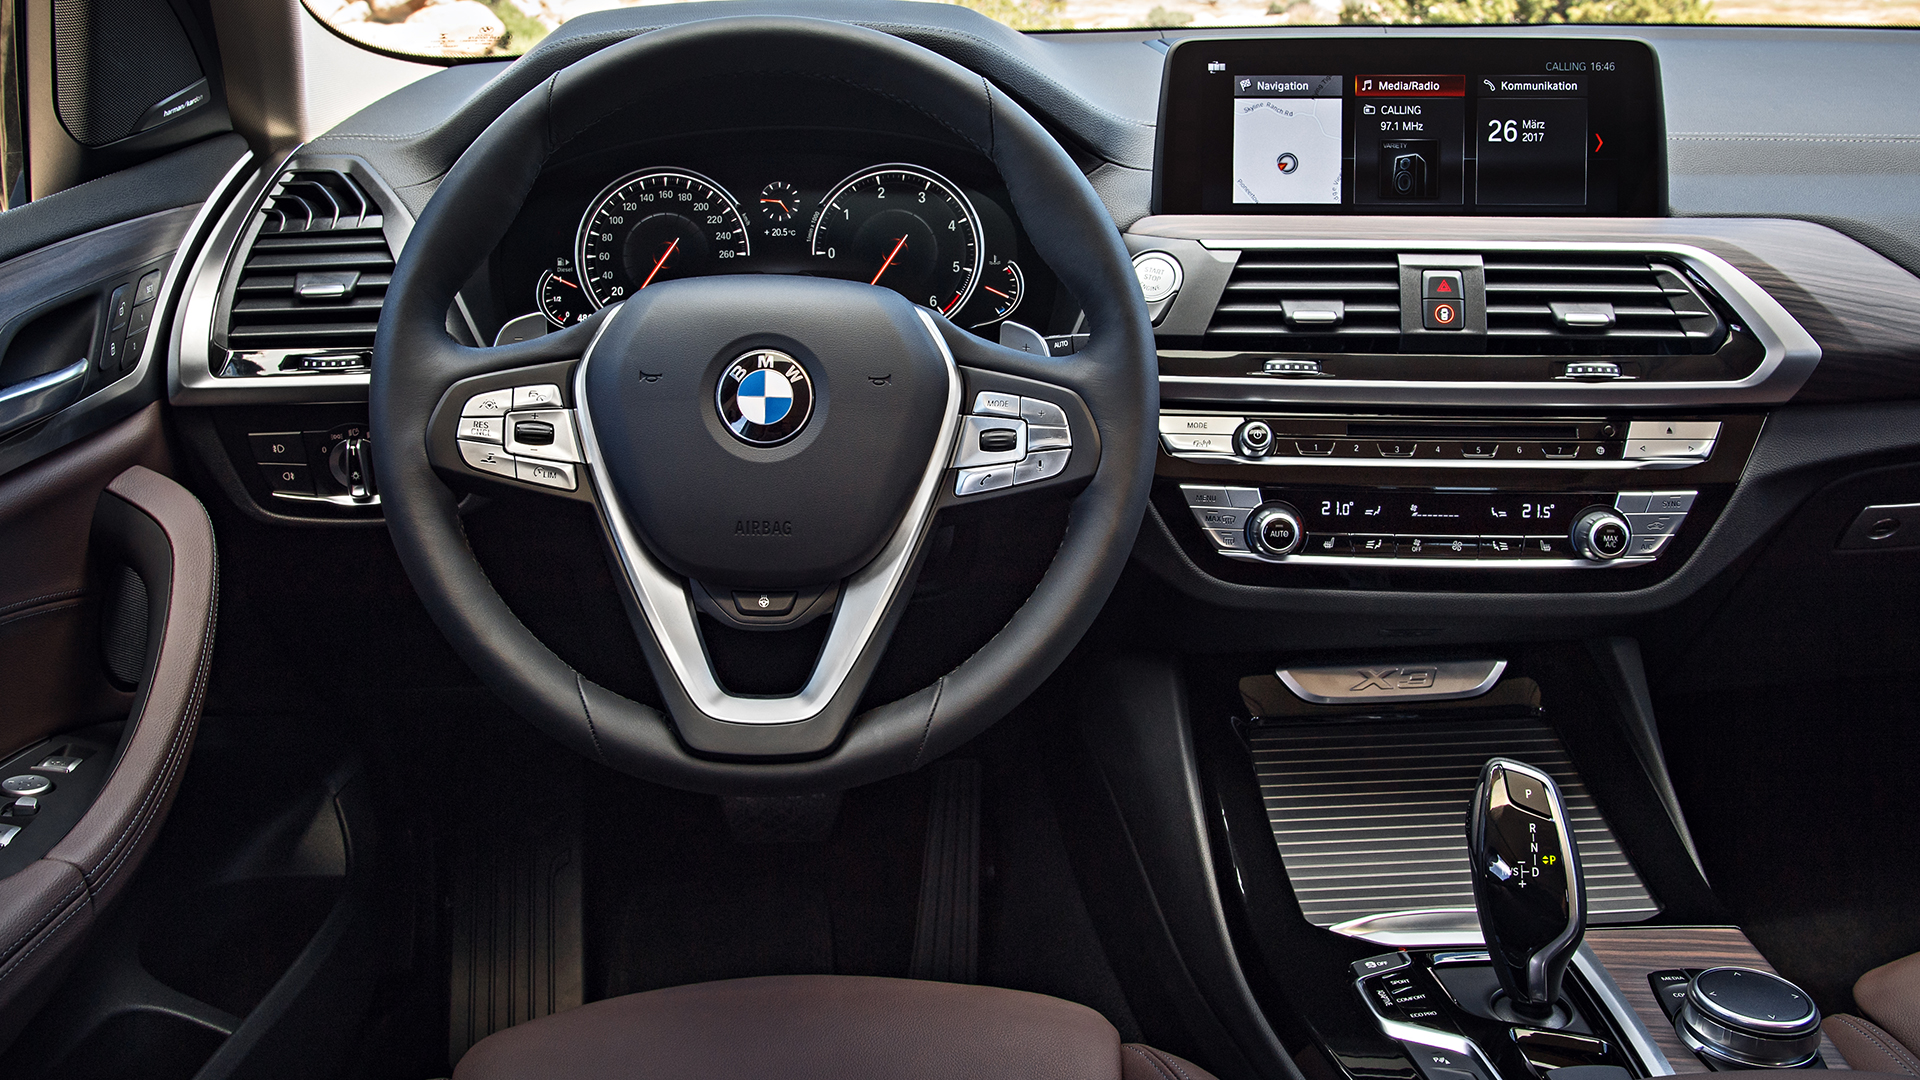 BMW X3 2018 XDrive20d Interior